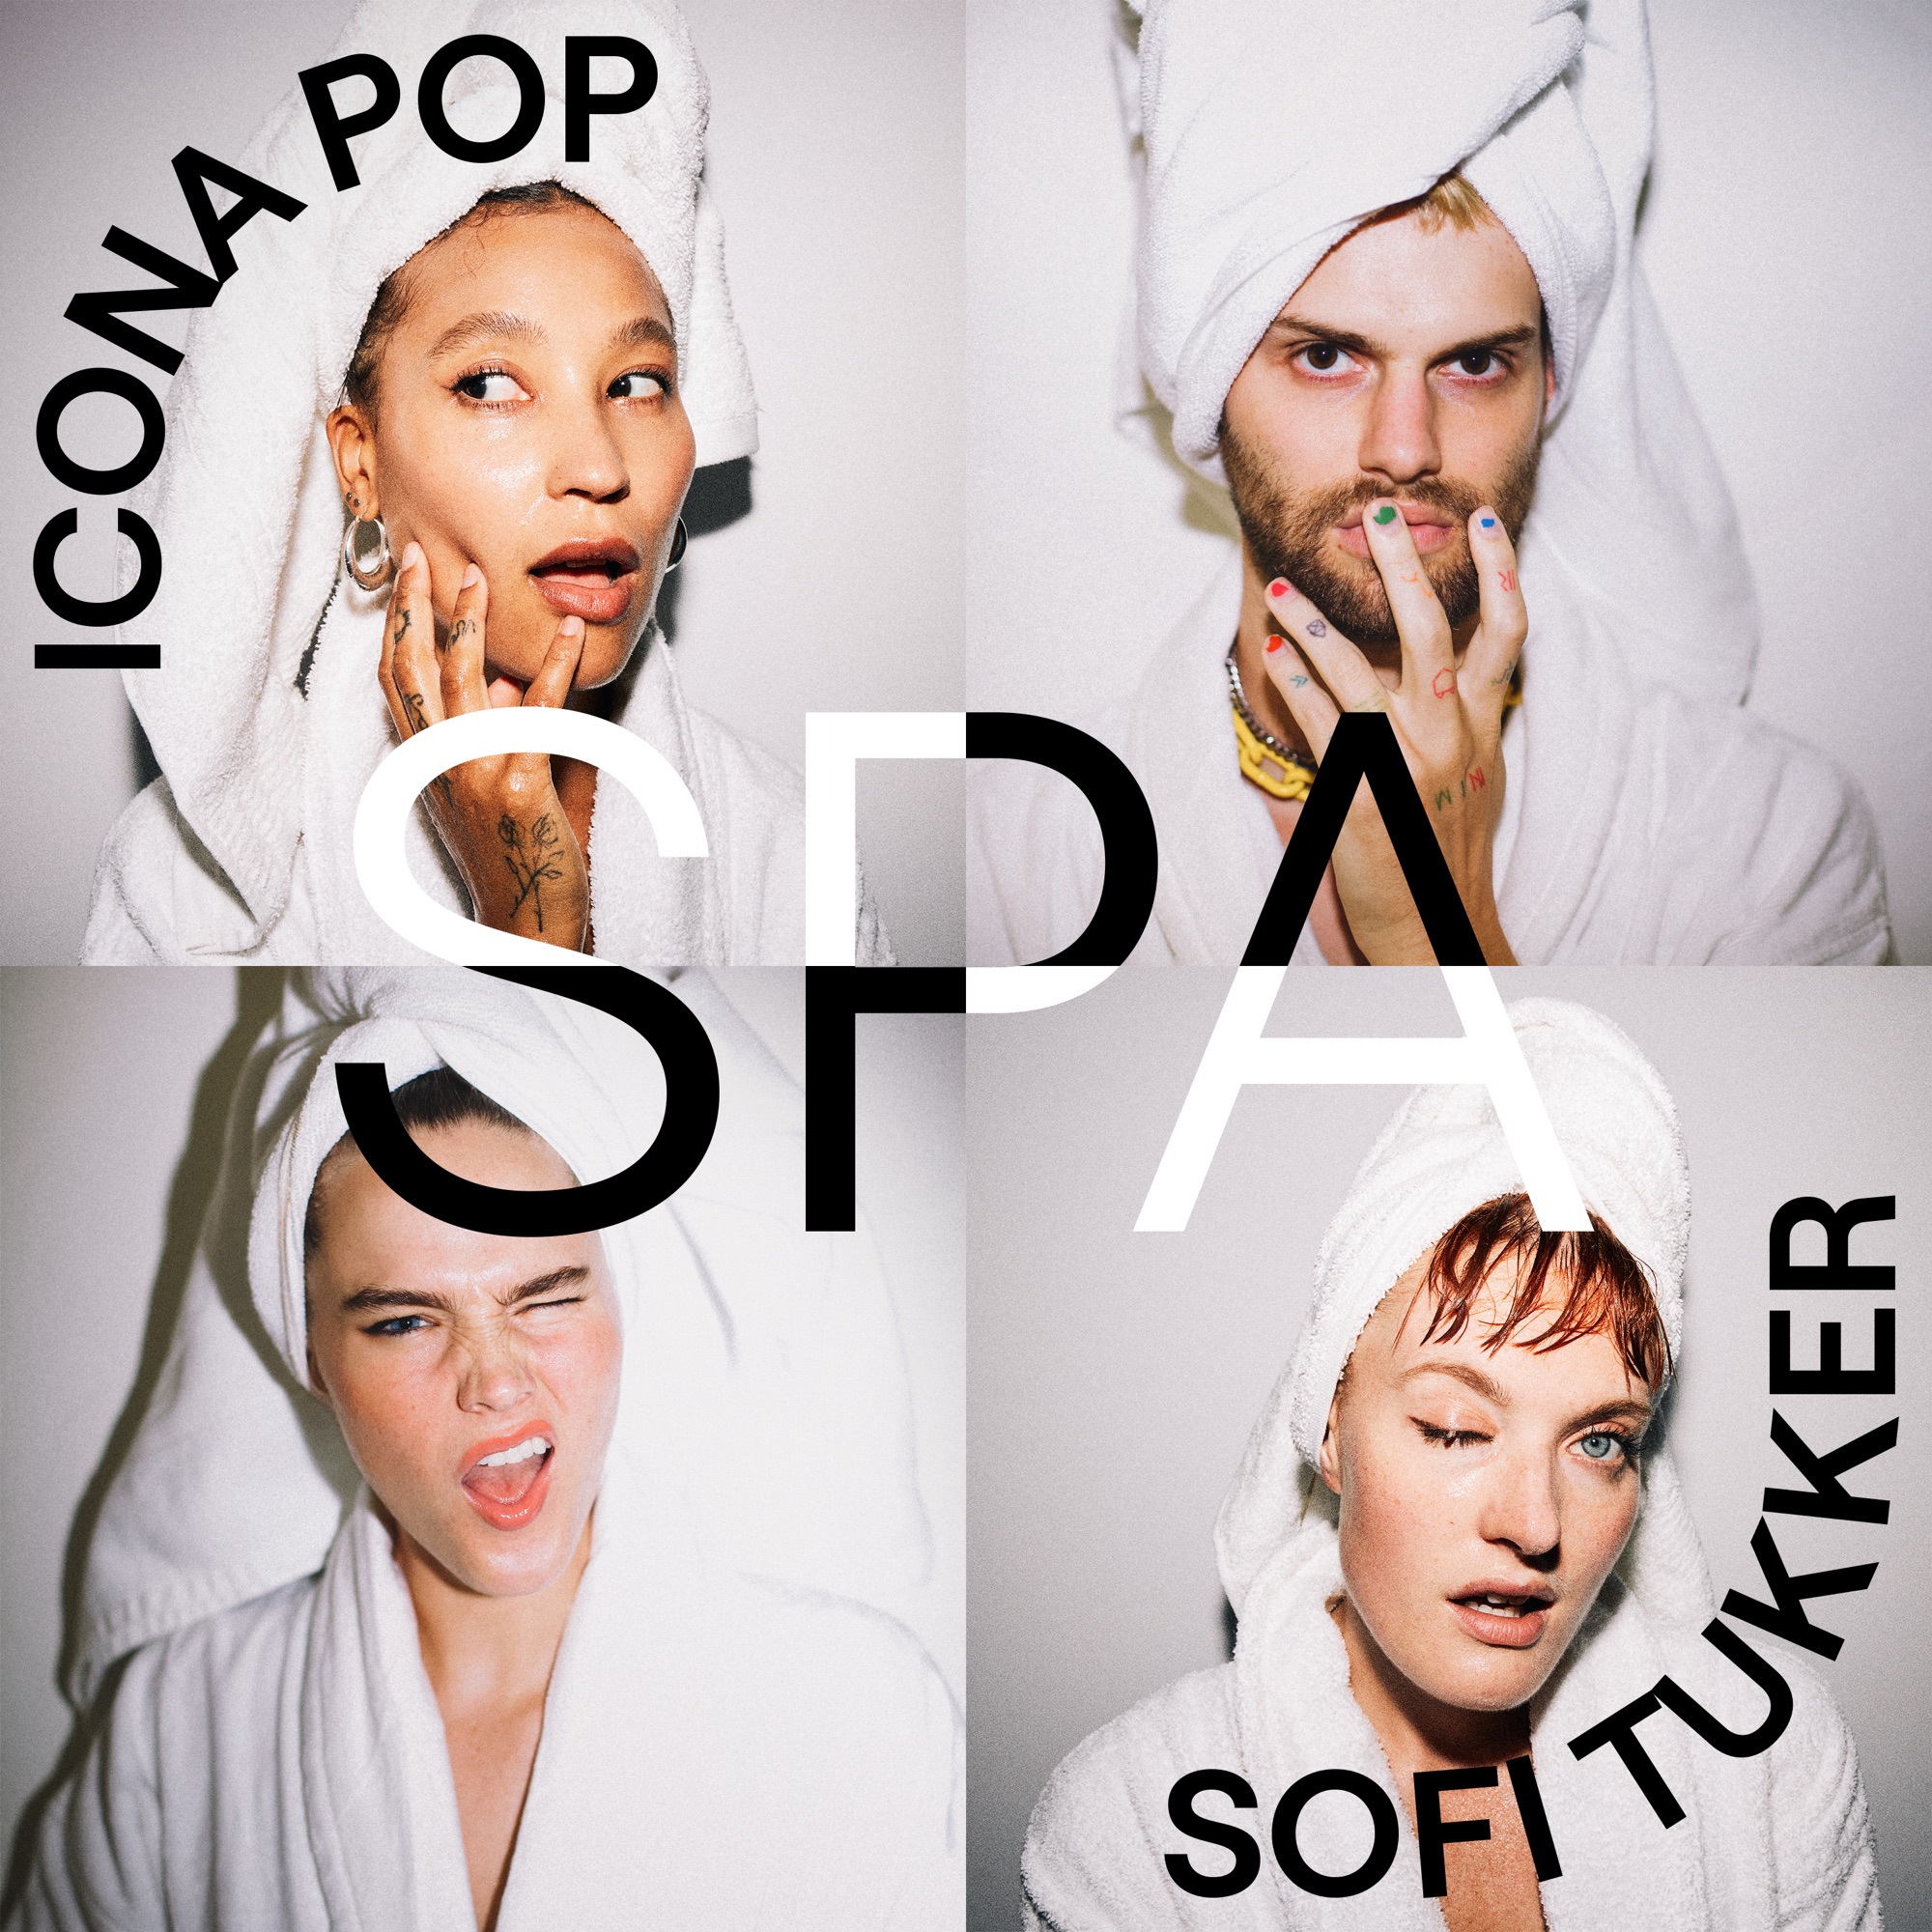 Icona Pop & Sofi Tukker - Spa - Single